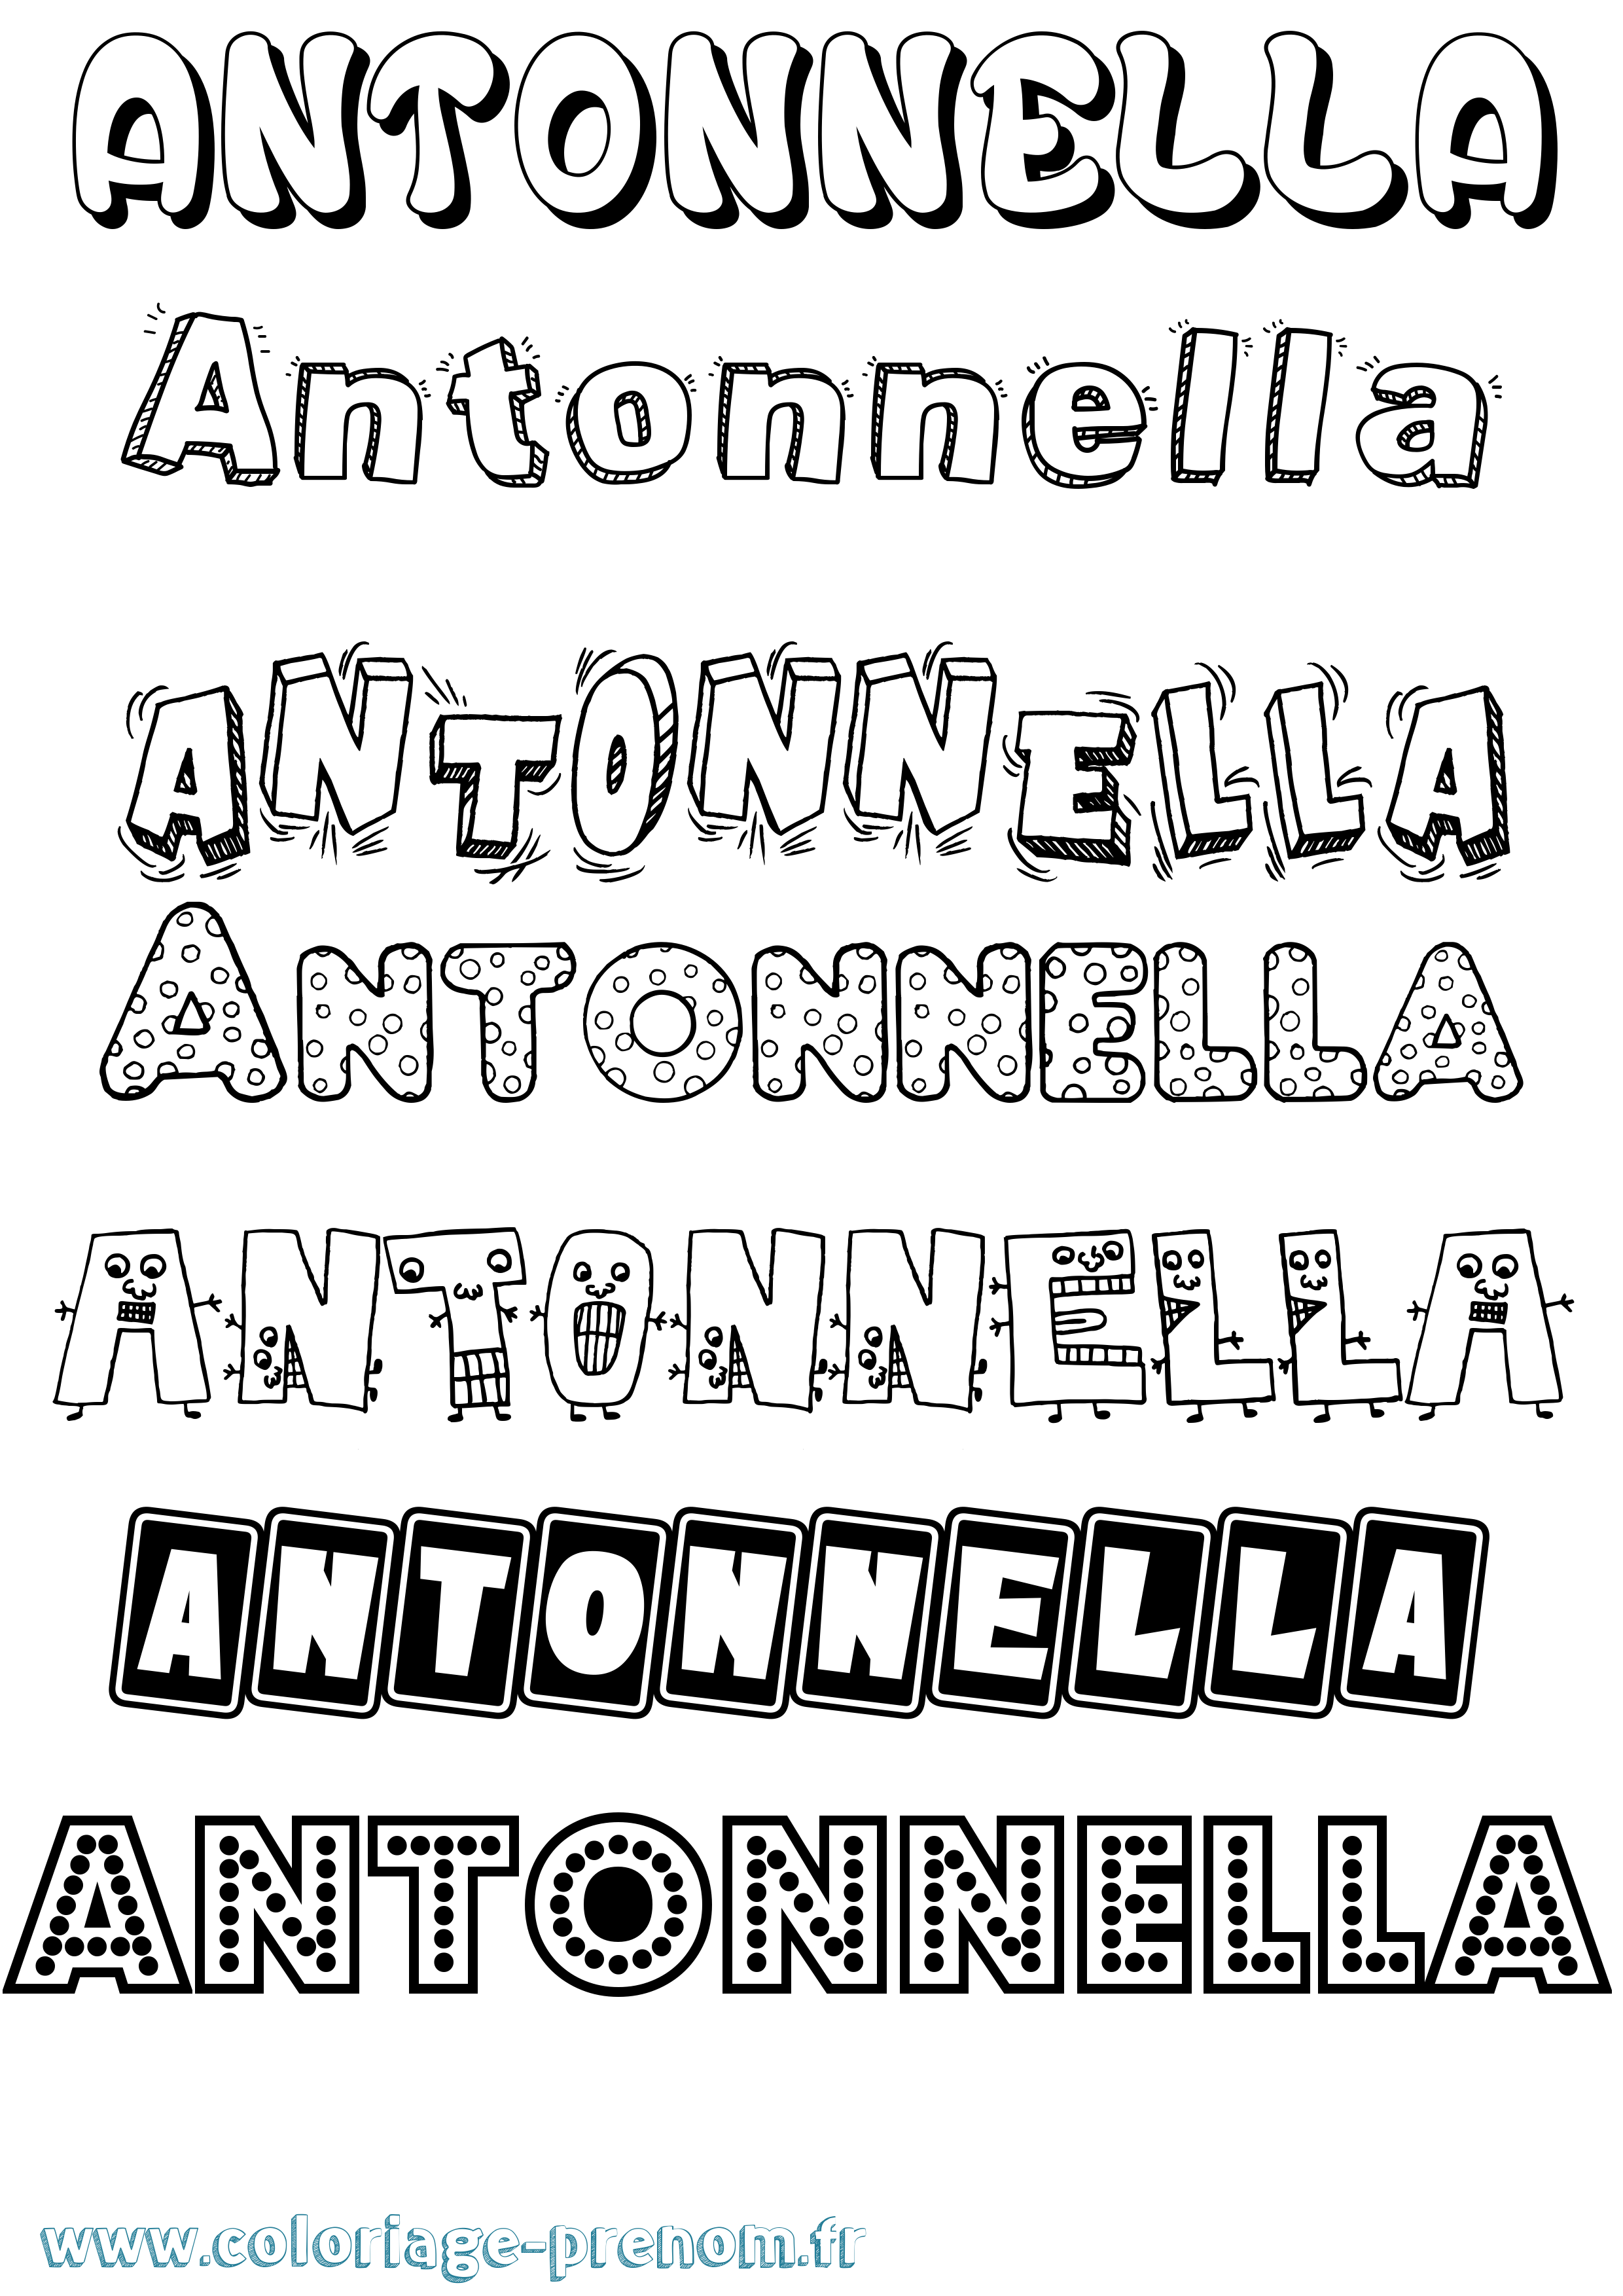 Coloriage prénom Antonnella Fun